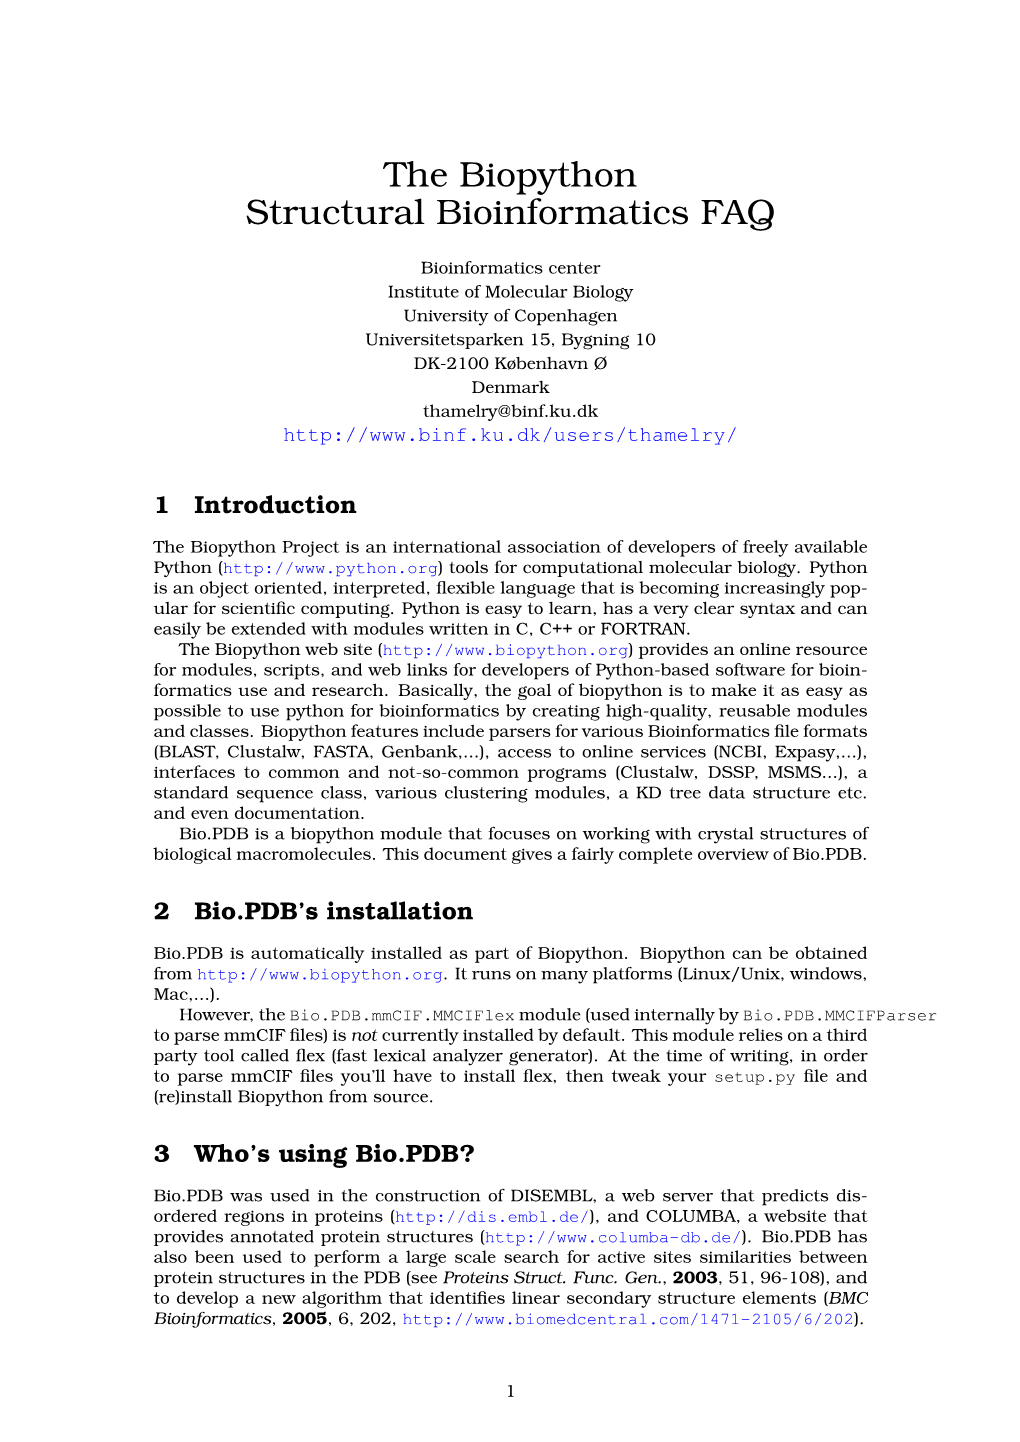 The Biopython Structural Bioinformatics FAQ